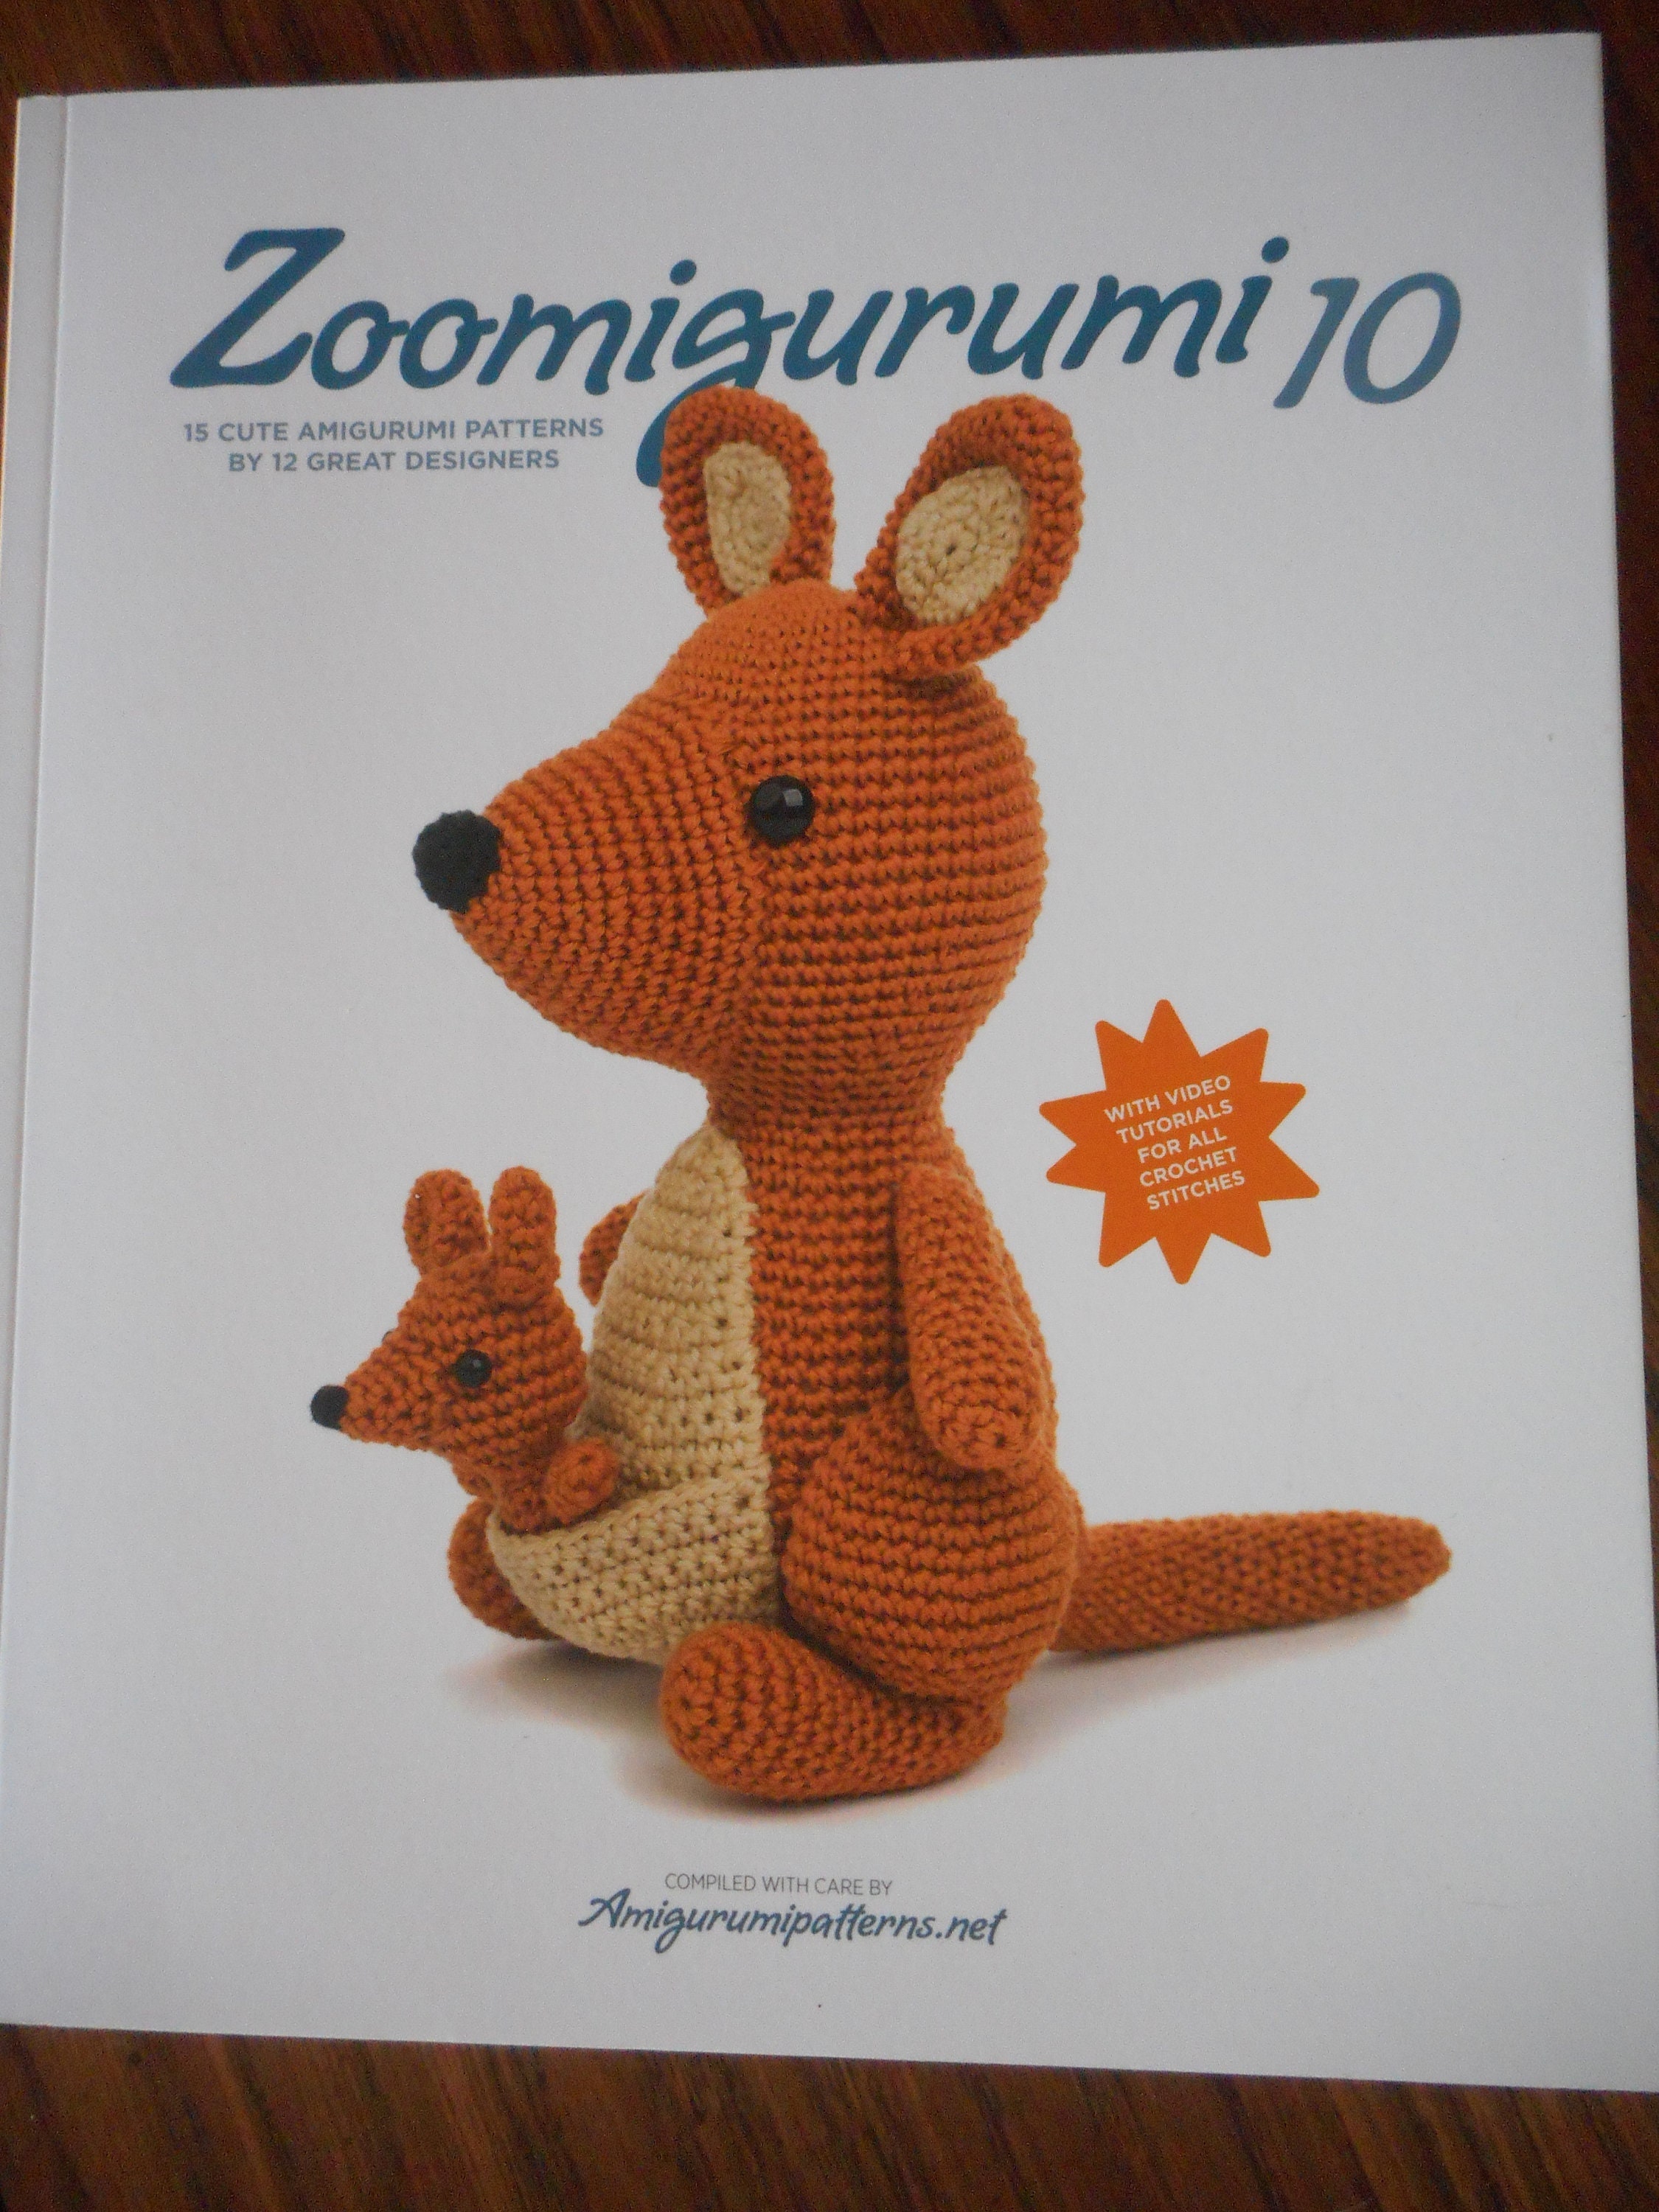 Zoomigurumi 10, Crochet Animal Amigurumi Pattern Book, Like New